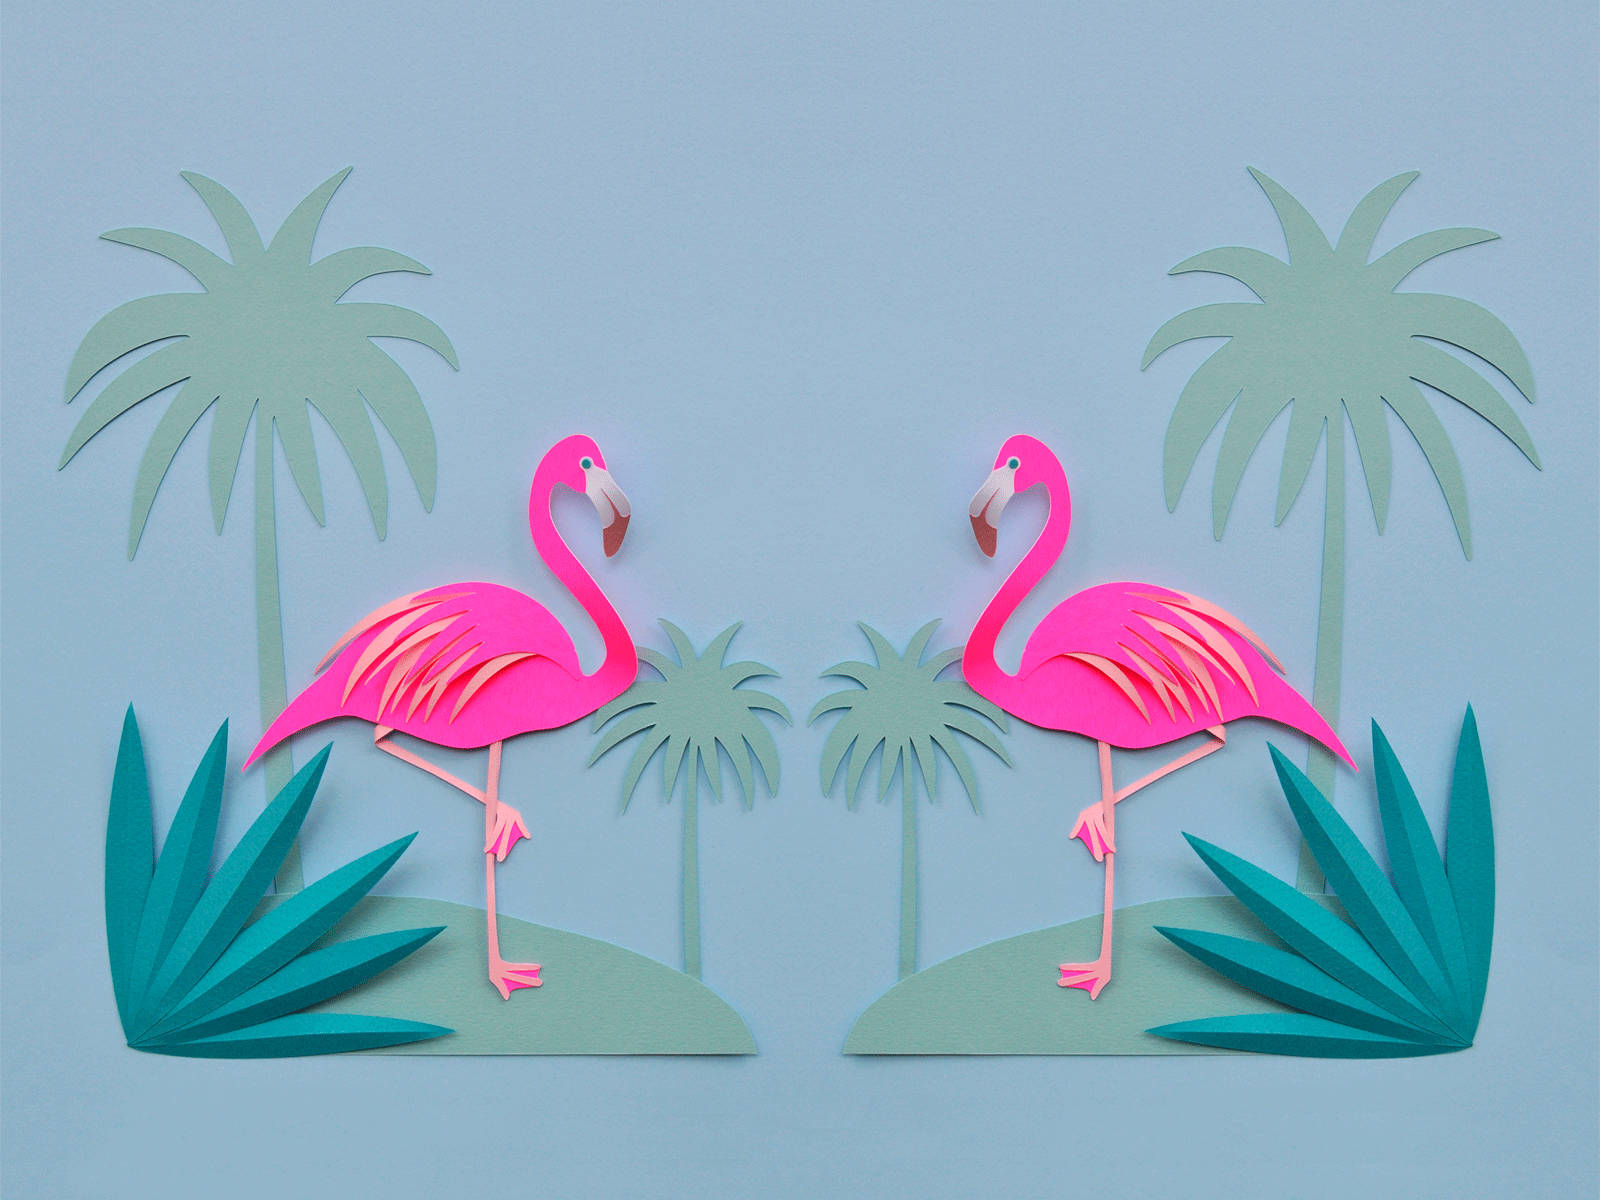 Free Flamingo Wallpaper Downloads, [100+] Flamingo Wallpapers for FREE |  